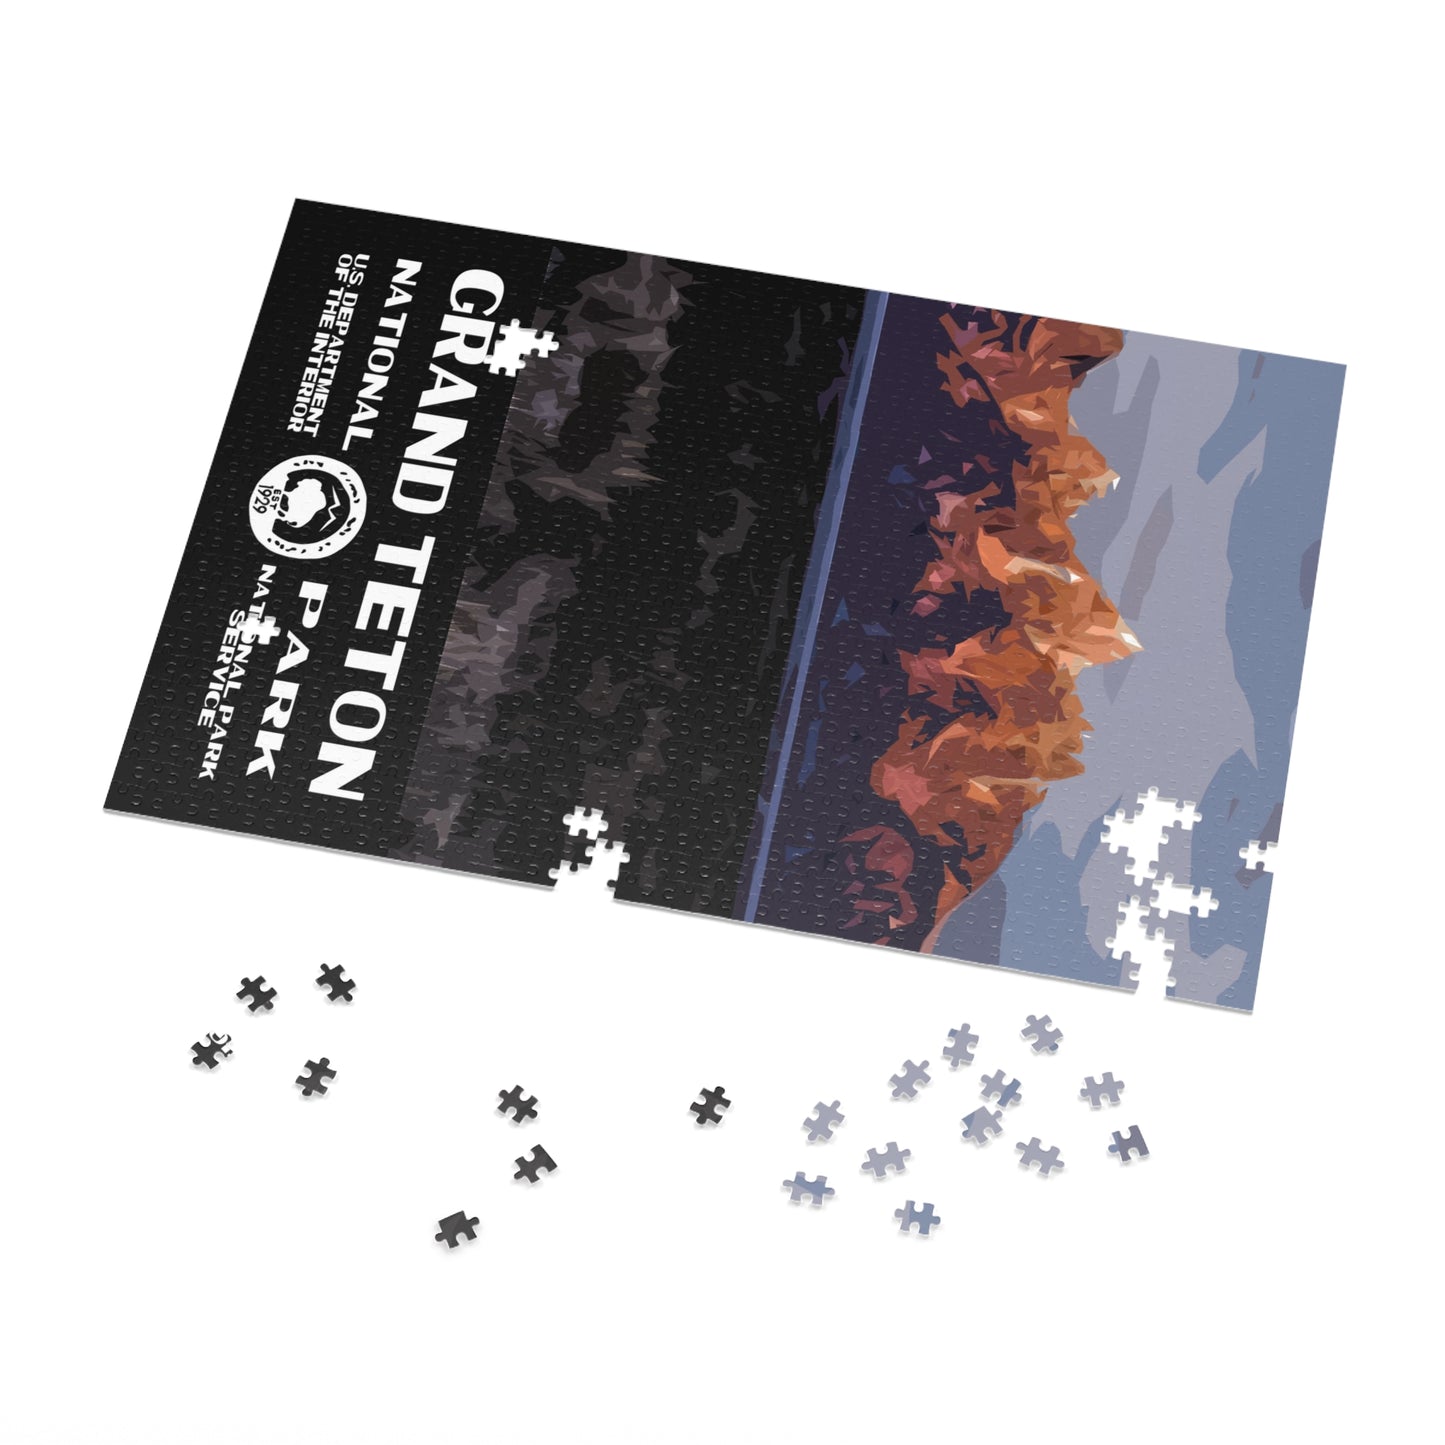 Grand Teton National Park Jigsaw Puzzle - 1000 Pieces